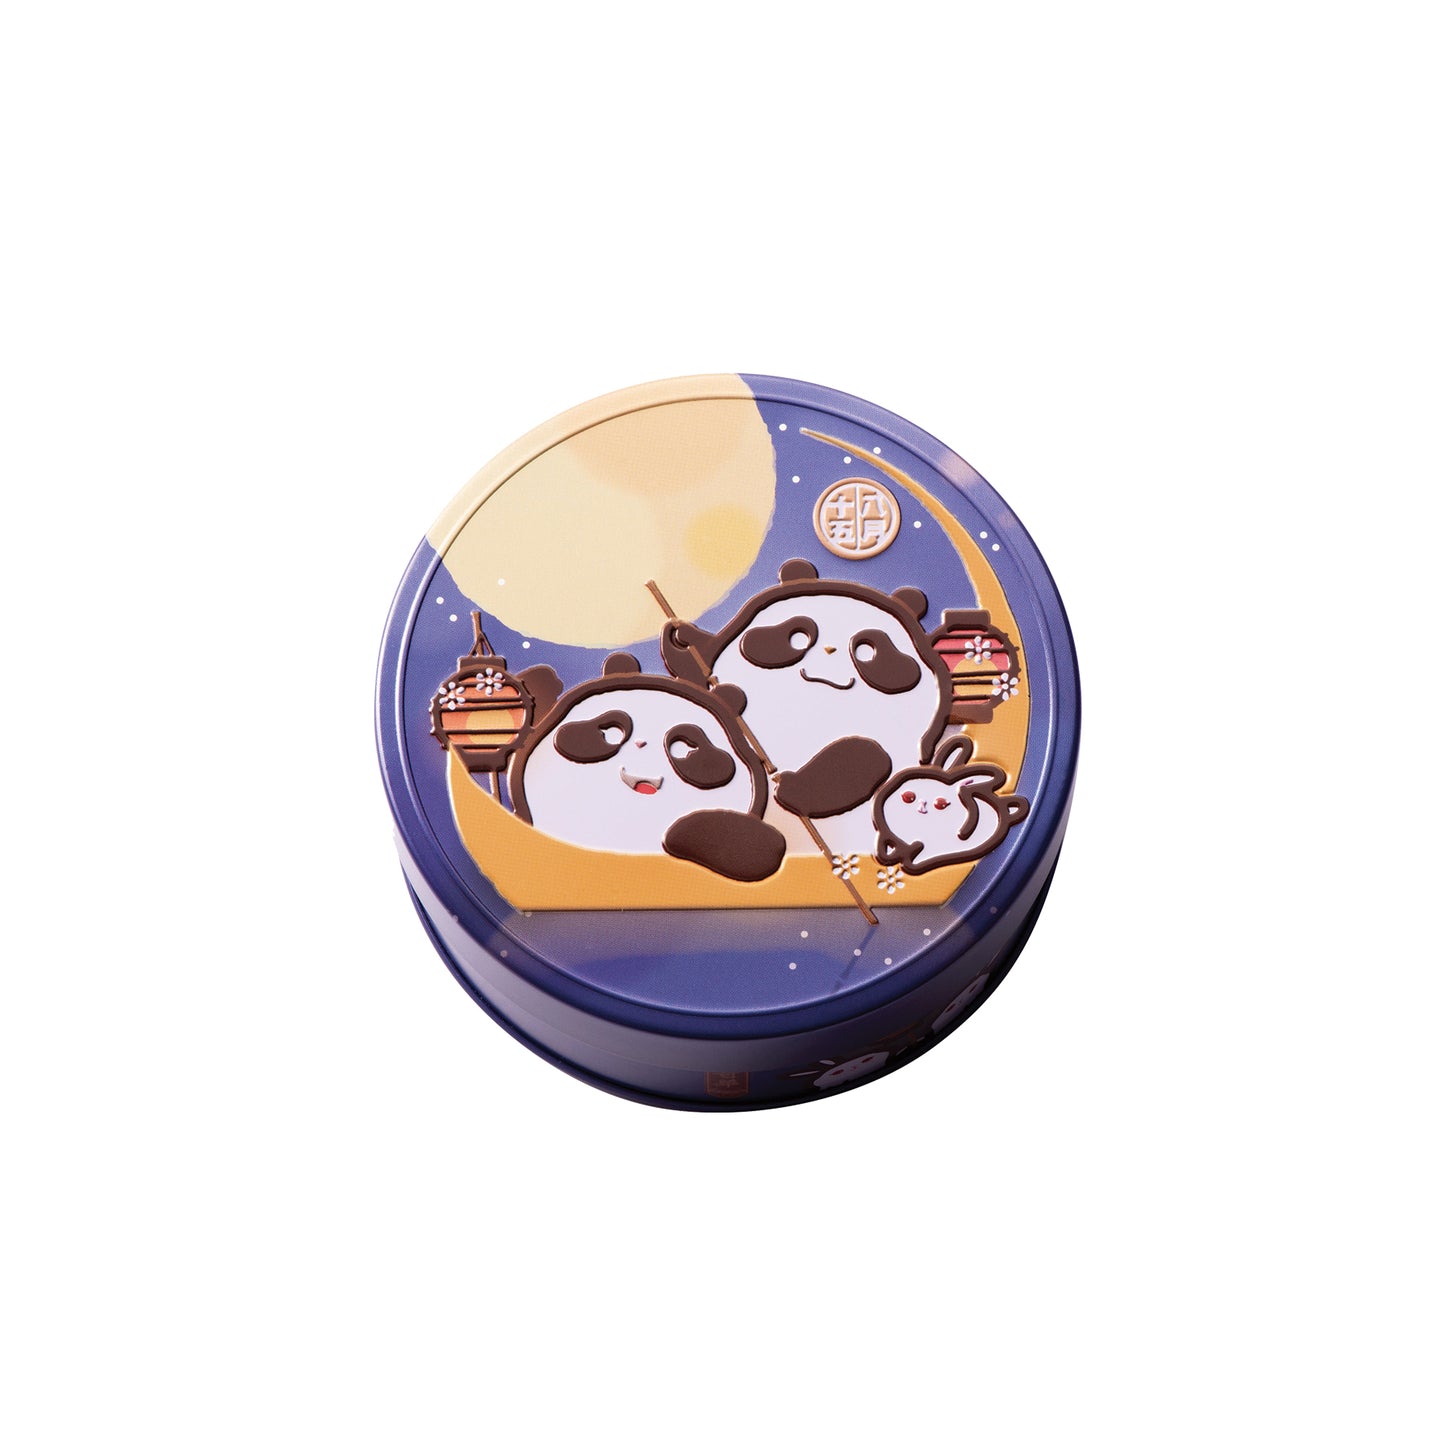 Cutie Panda Yolk Custard Moon Cakes Gift Tin (2pc) 趣緻熊貓奶黃小罐